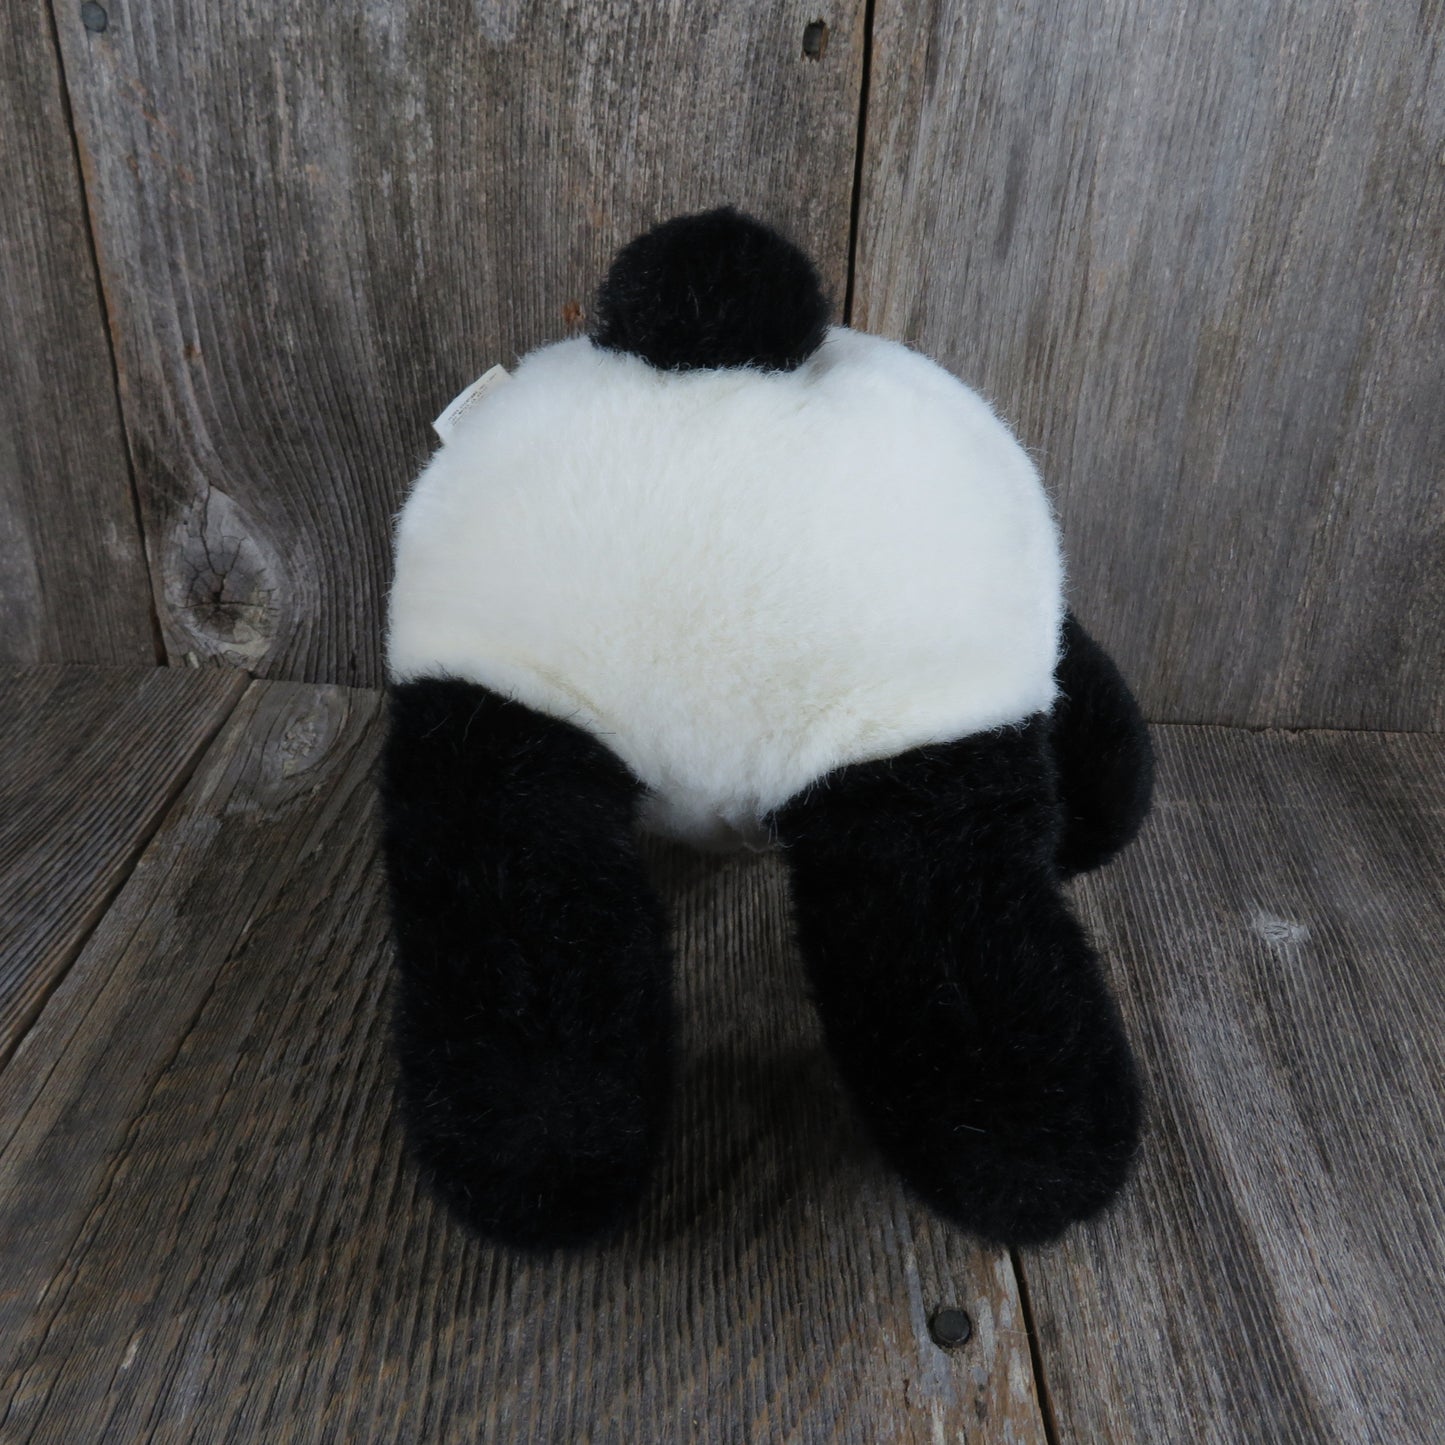 Vintage Panda Teddy Bear Plush Stuffed Animal Plush Creations Pacifier 1997